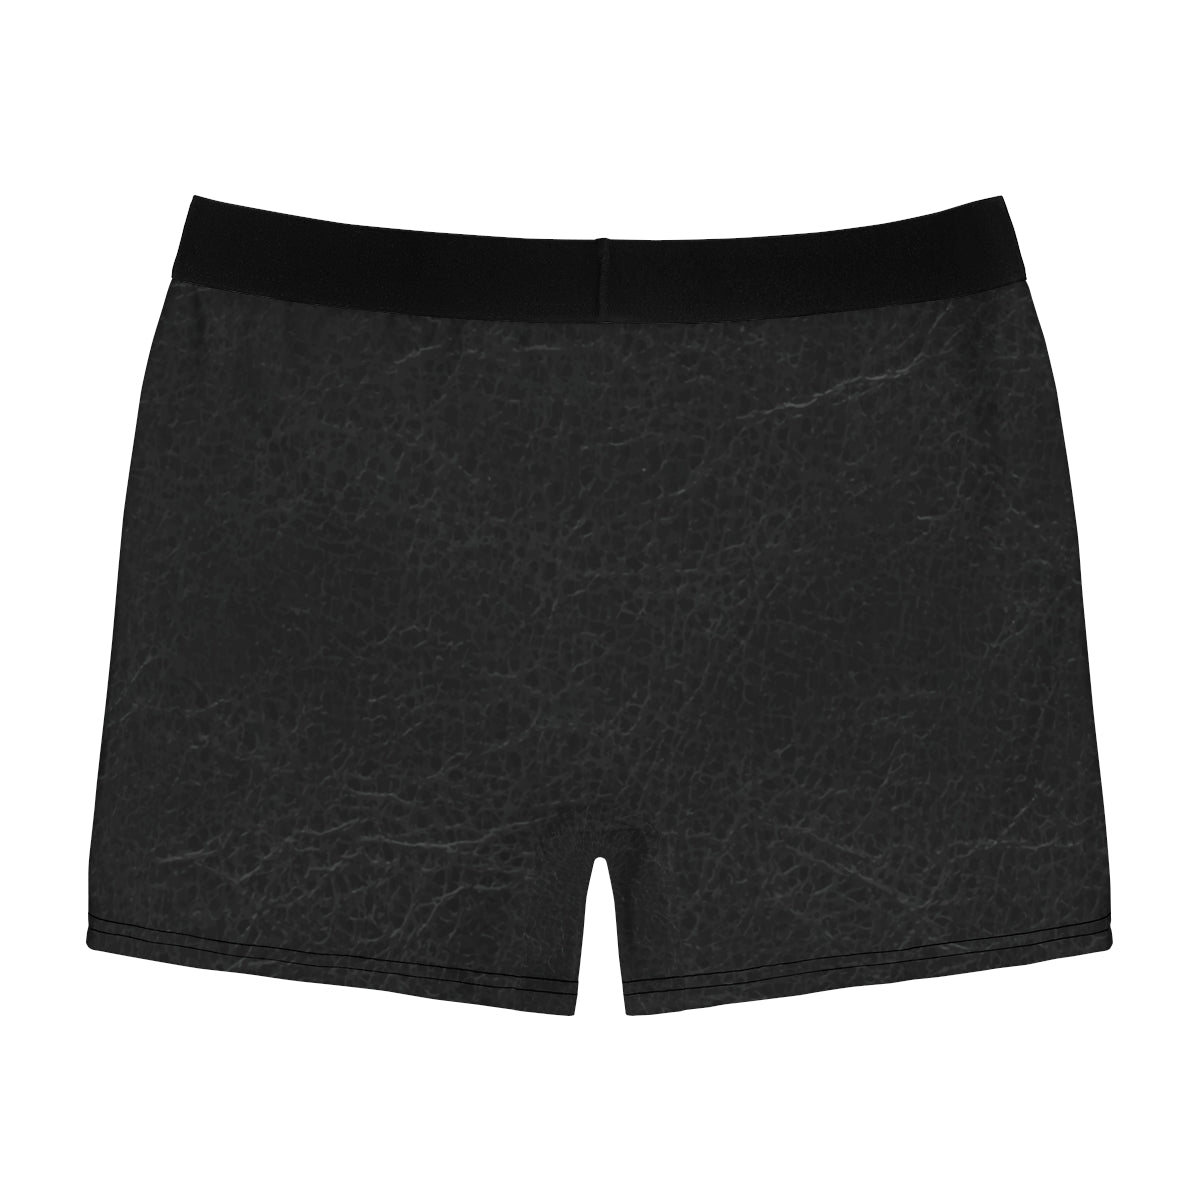 LEATHERTONE [Black] Boxer Briefs | CANAANWEAR | Underwear | All Over Print